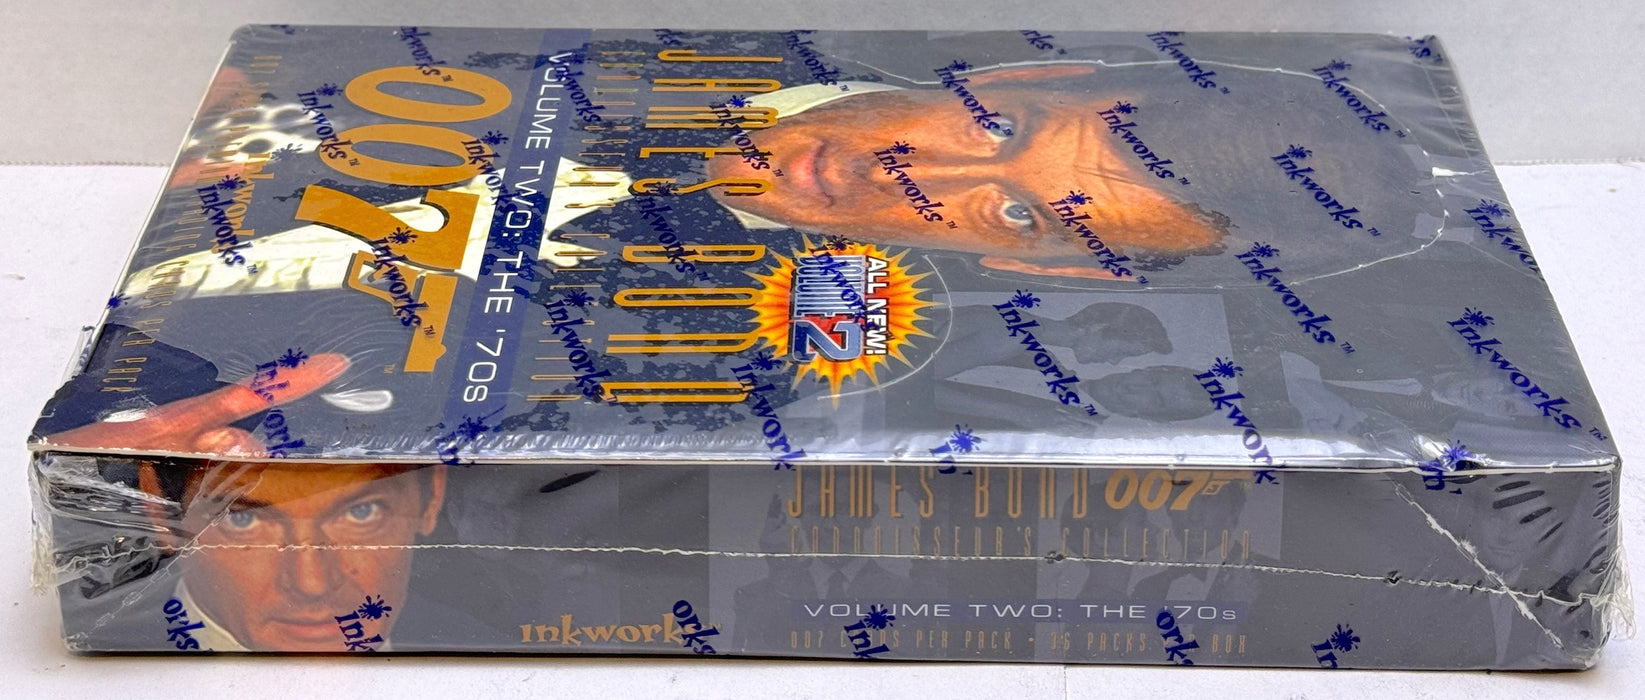 1996 James Bond Connoisseur's Volume 2 Trading Card Box 36 Packs Inkworks   - TvMovieCards.com